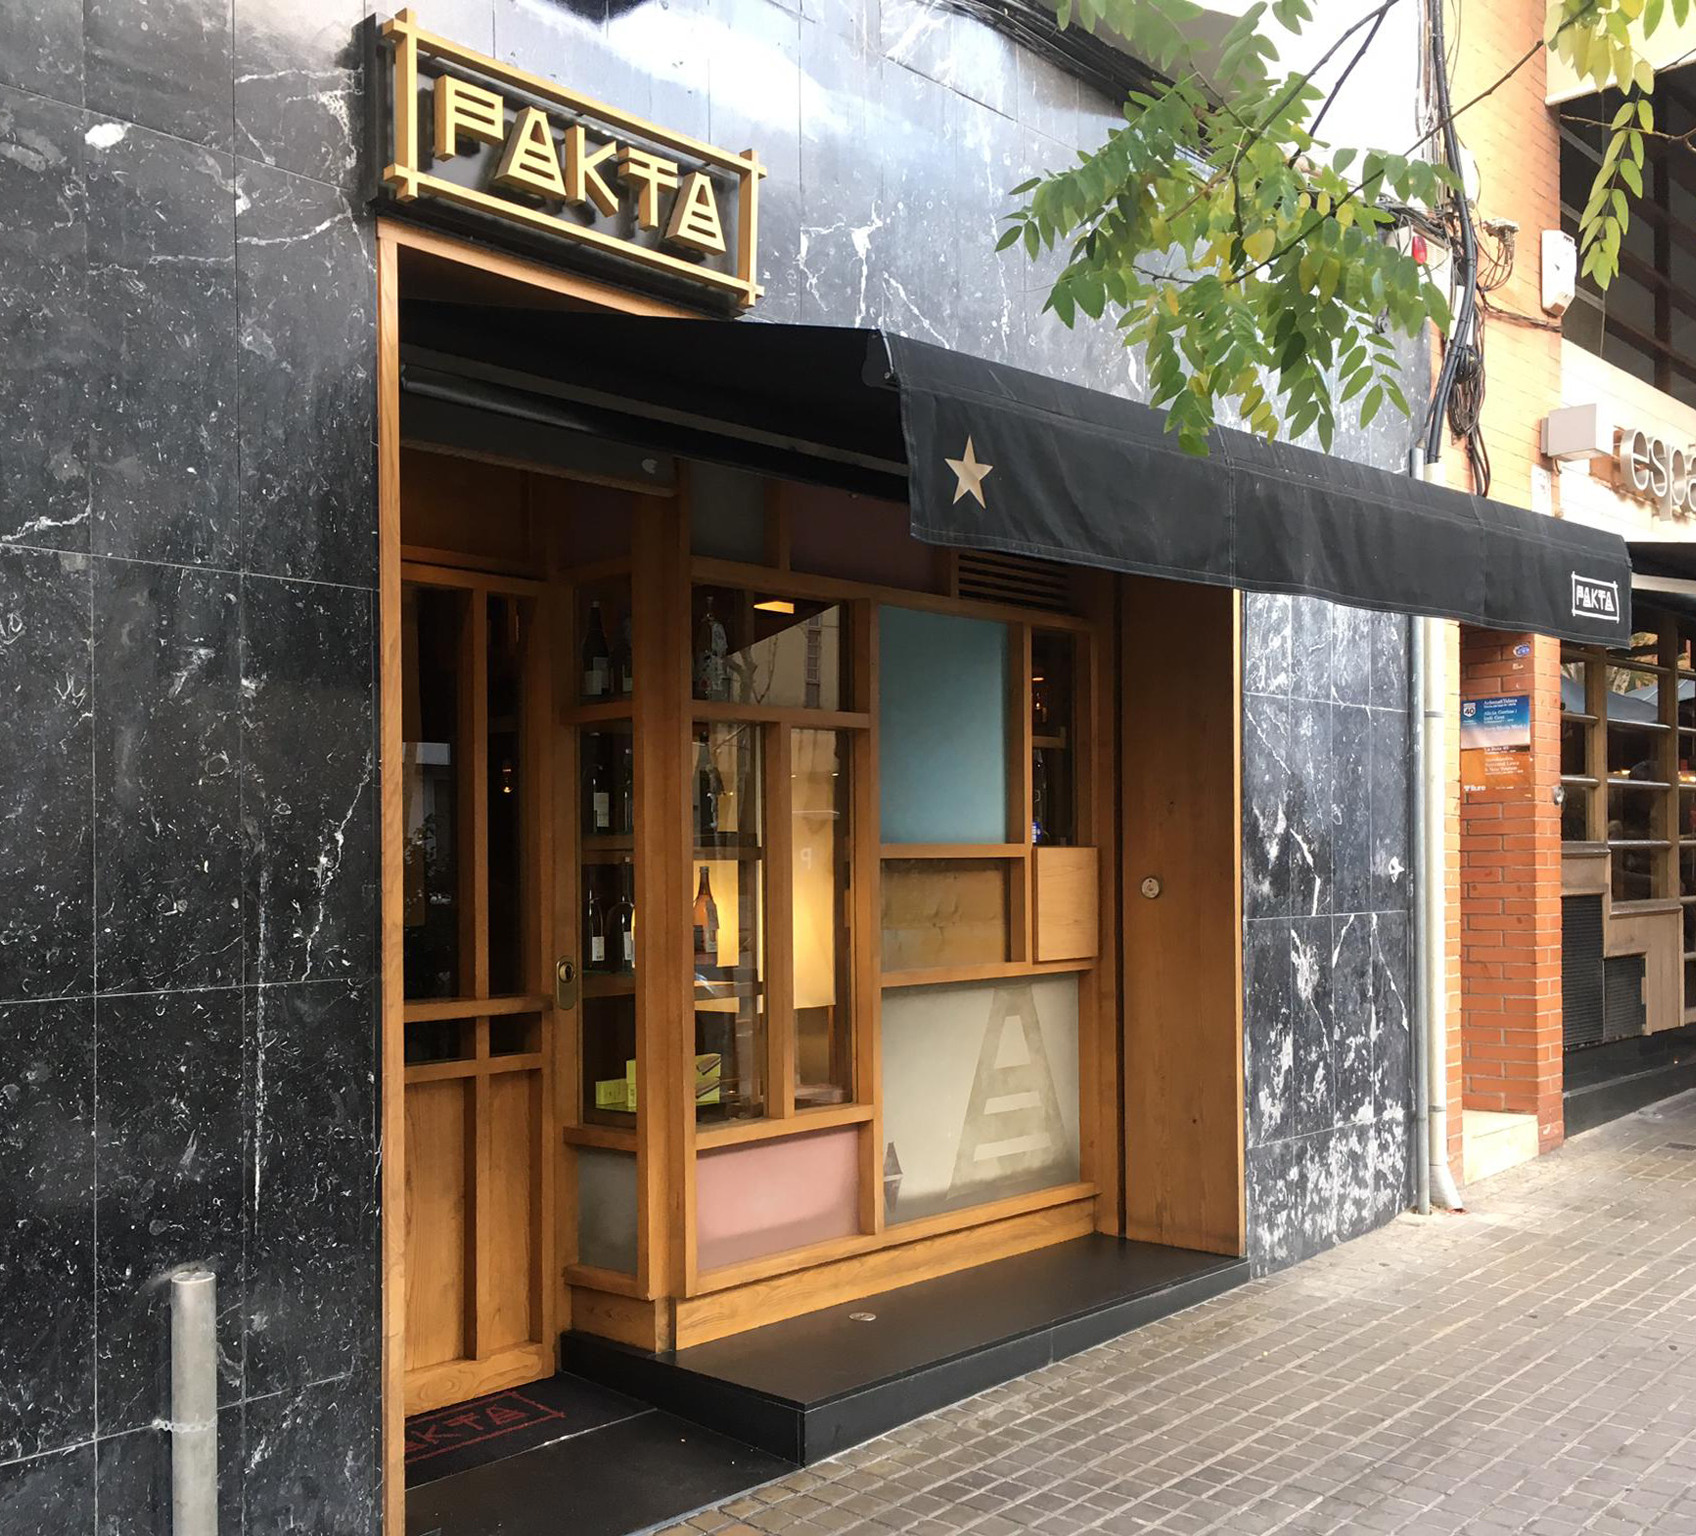 El restaurante Pakta